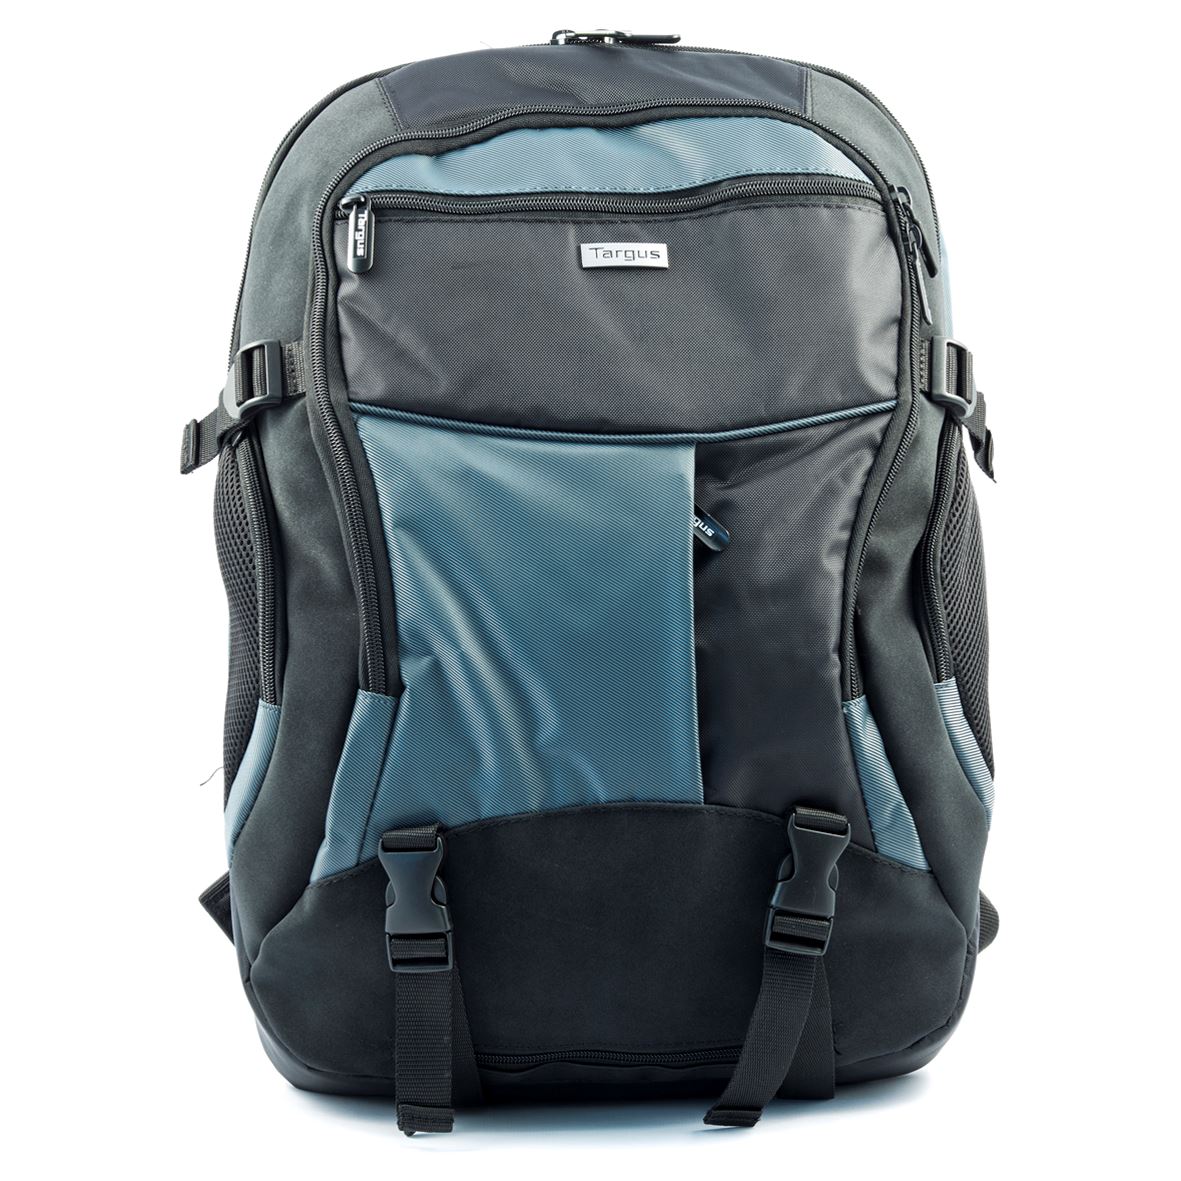 idee als resultaat NieuwZeeland Atmosphere 17-18" XL Laptop Backpack - Black/Blue